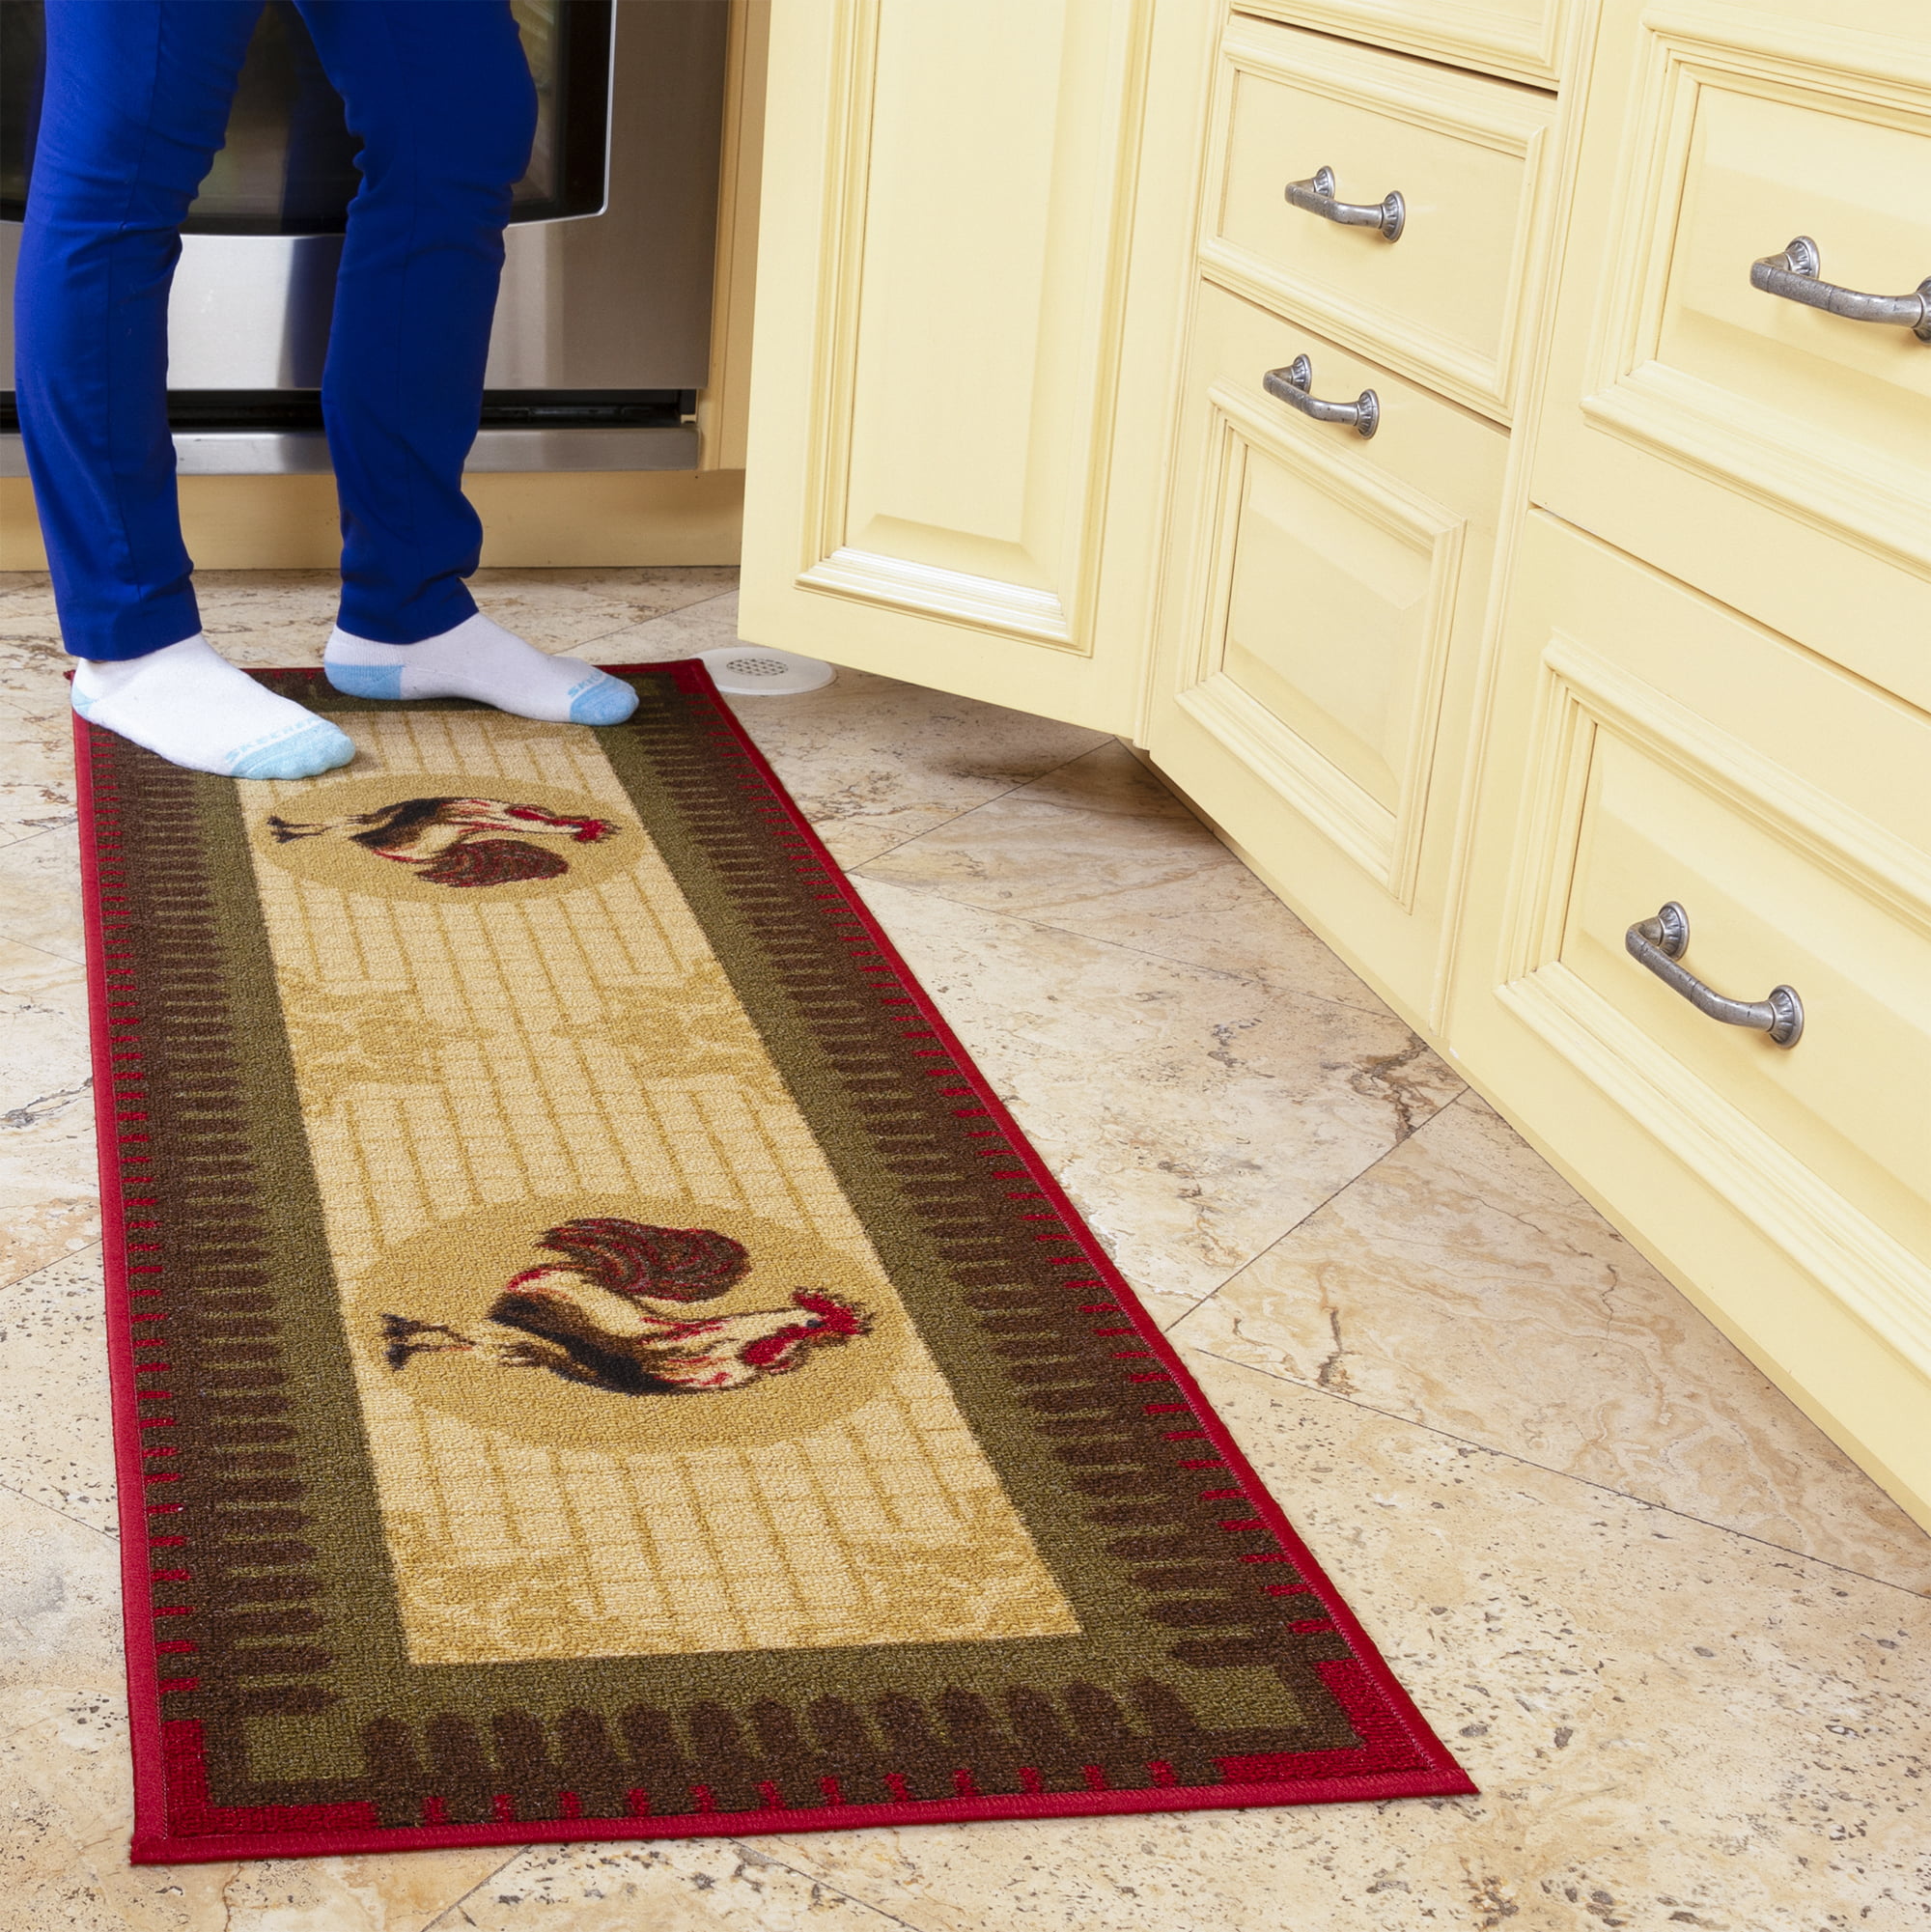 Kitchen Rugs Safe For Hardwood Floors – Kitchen Info